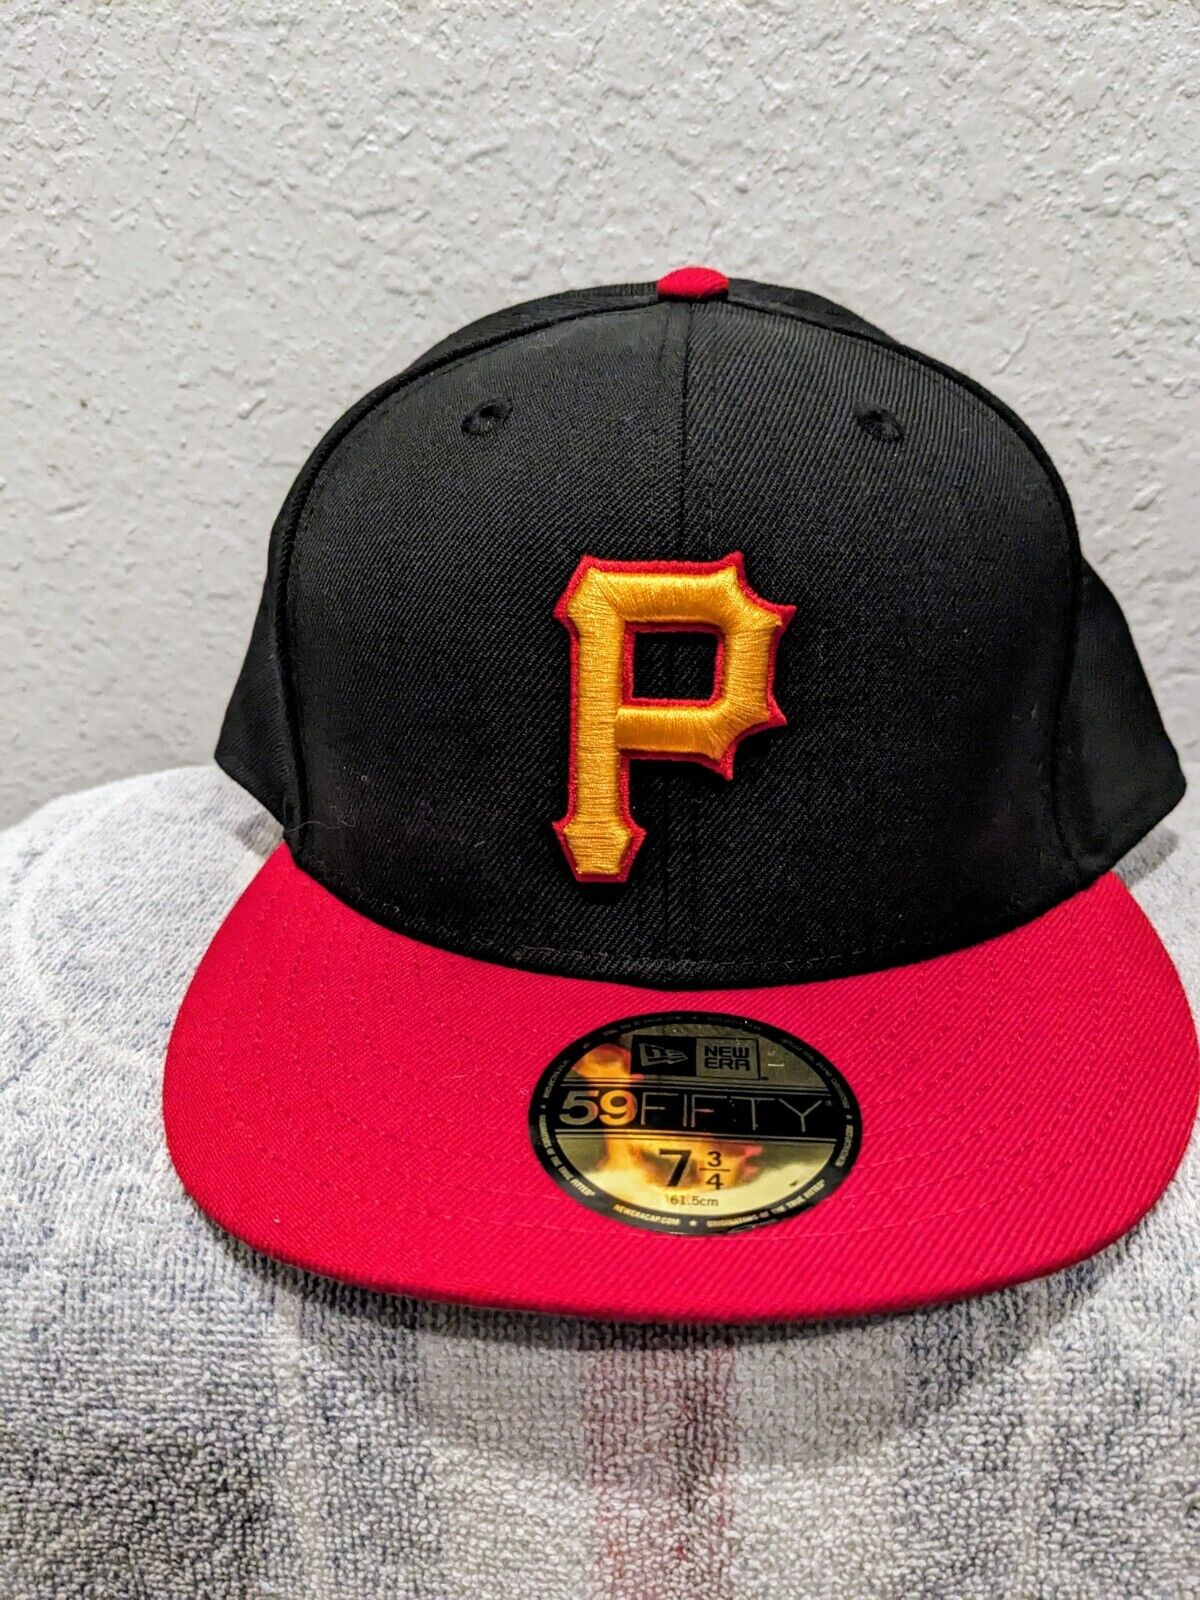 Vintage Alternate Pittsburgh Pirates Hat By New Era - Sz 7 3/4